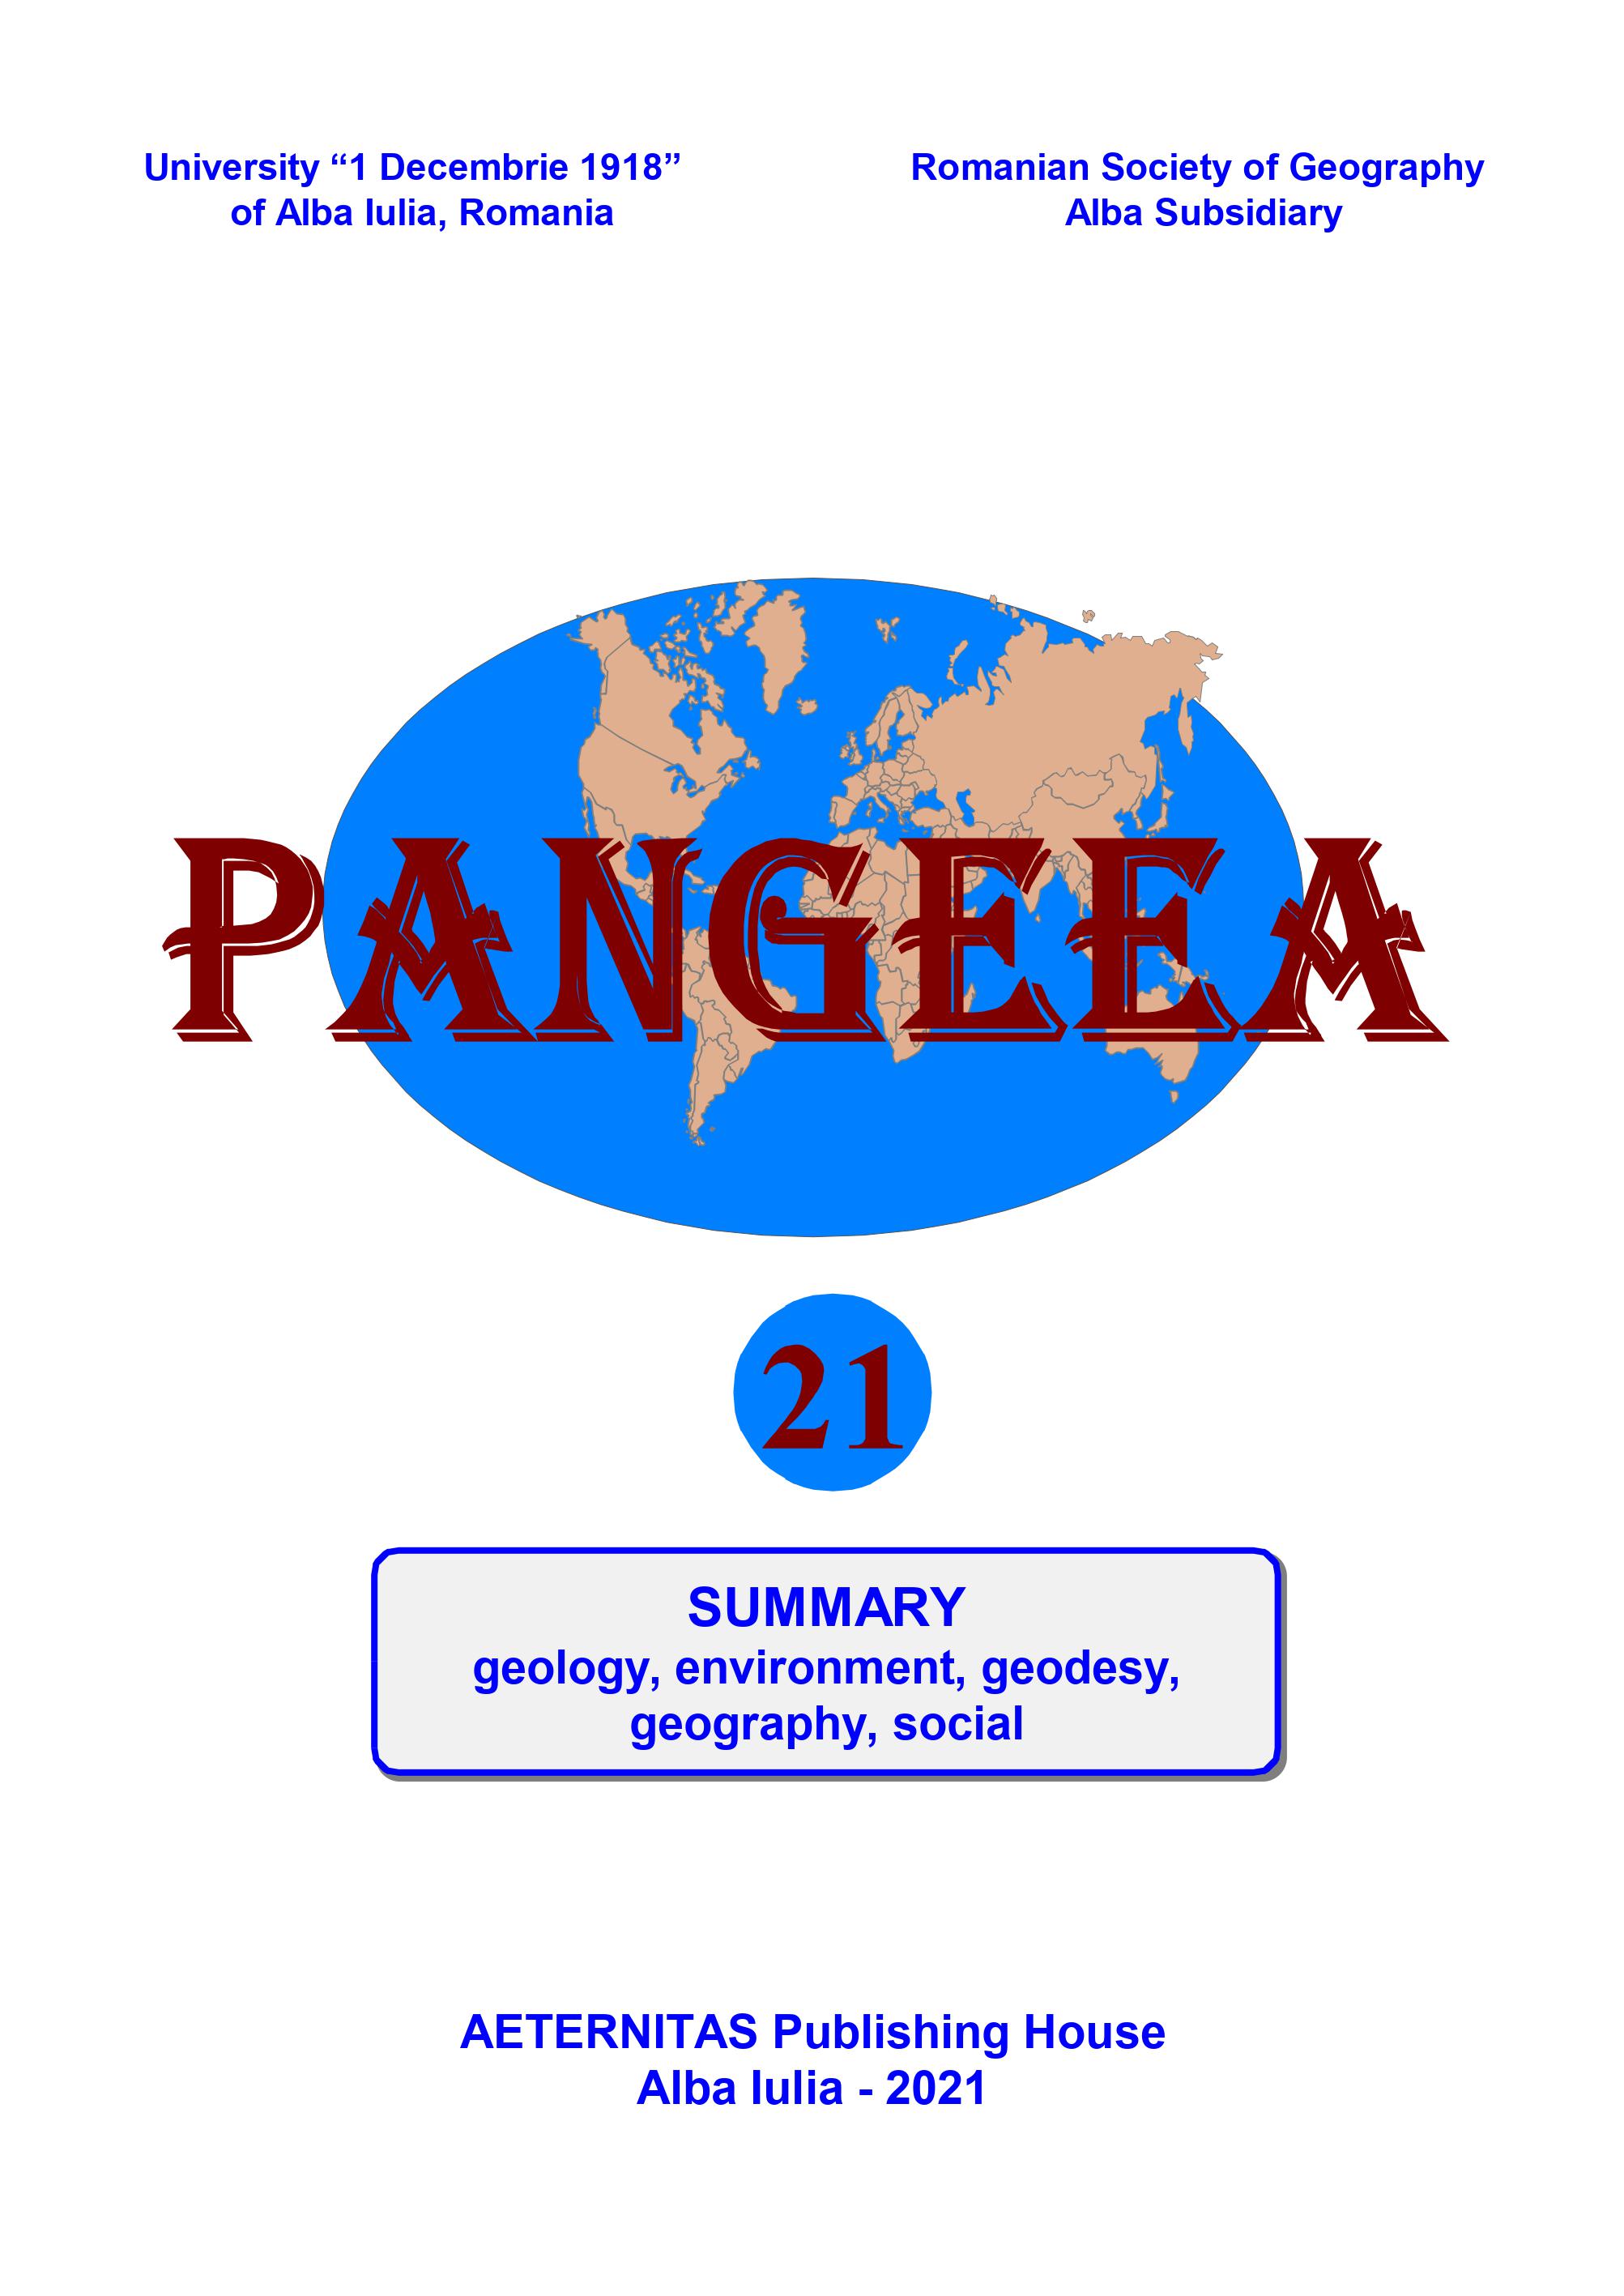 PANGEEA Cover Image